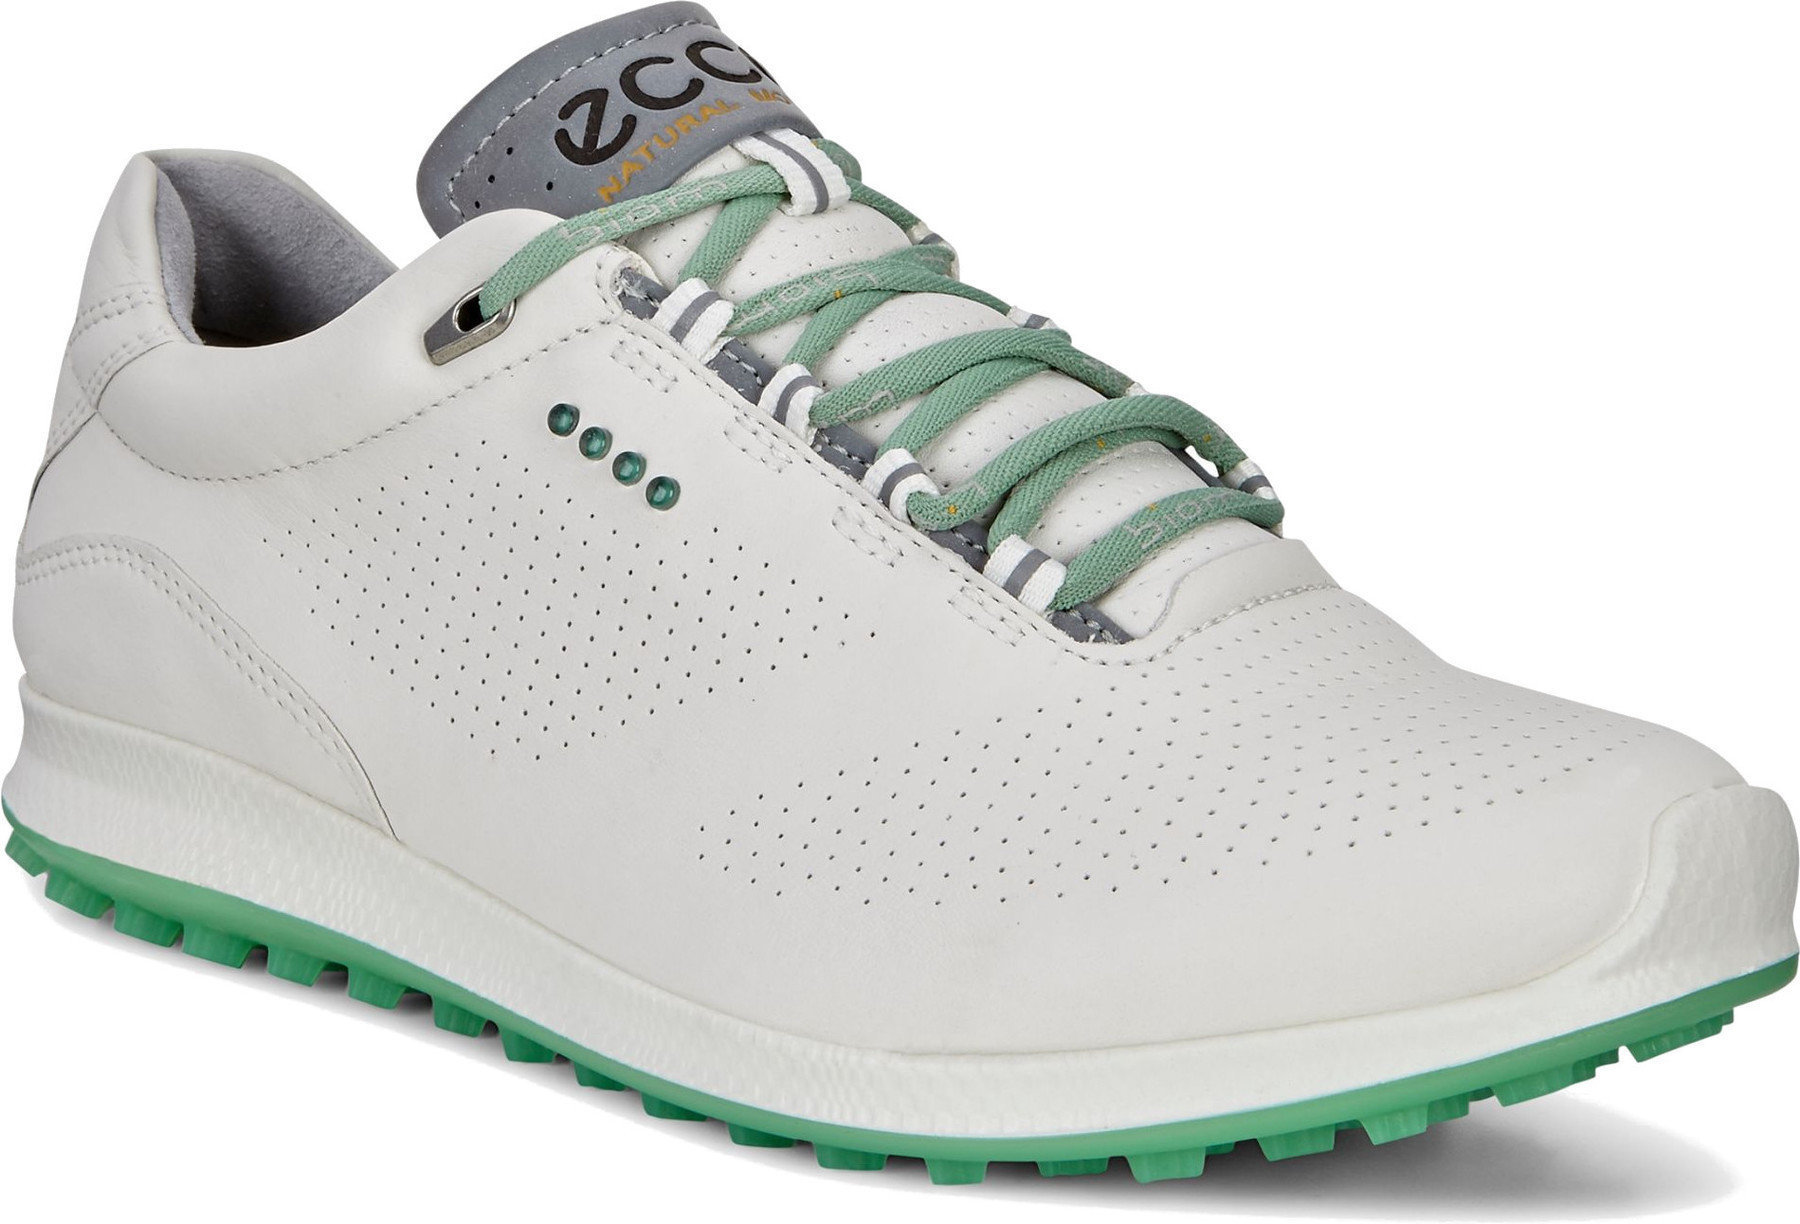 Chaussures de golf pour femmes Ecco Biom Hybrid 2 Chaussures de Golf Femmes White/Granite Green 38